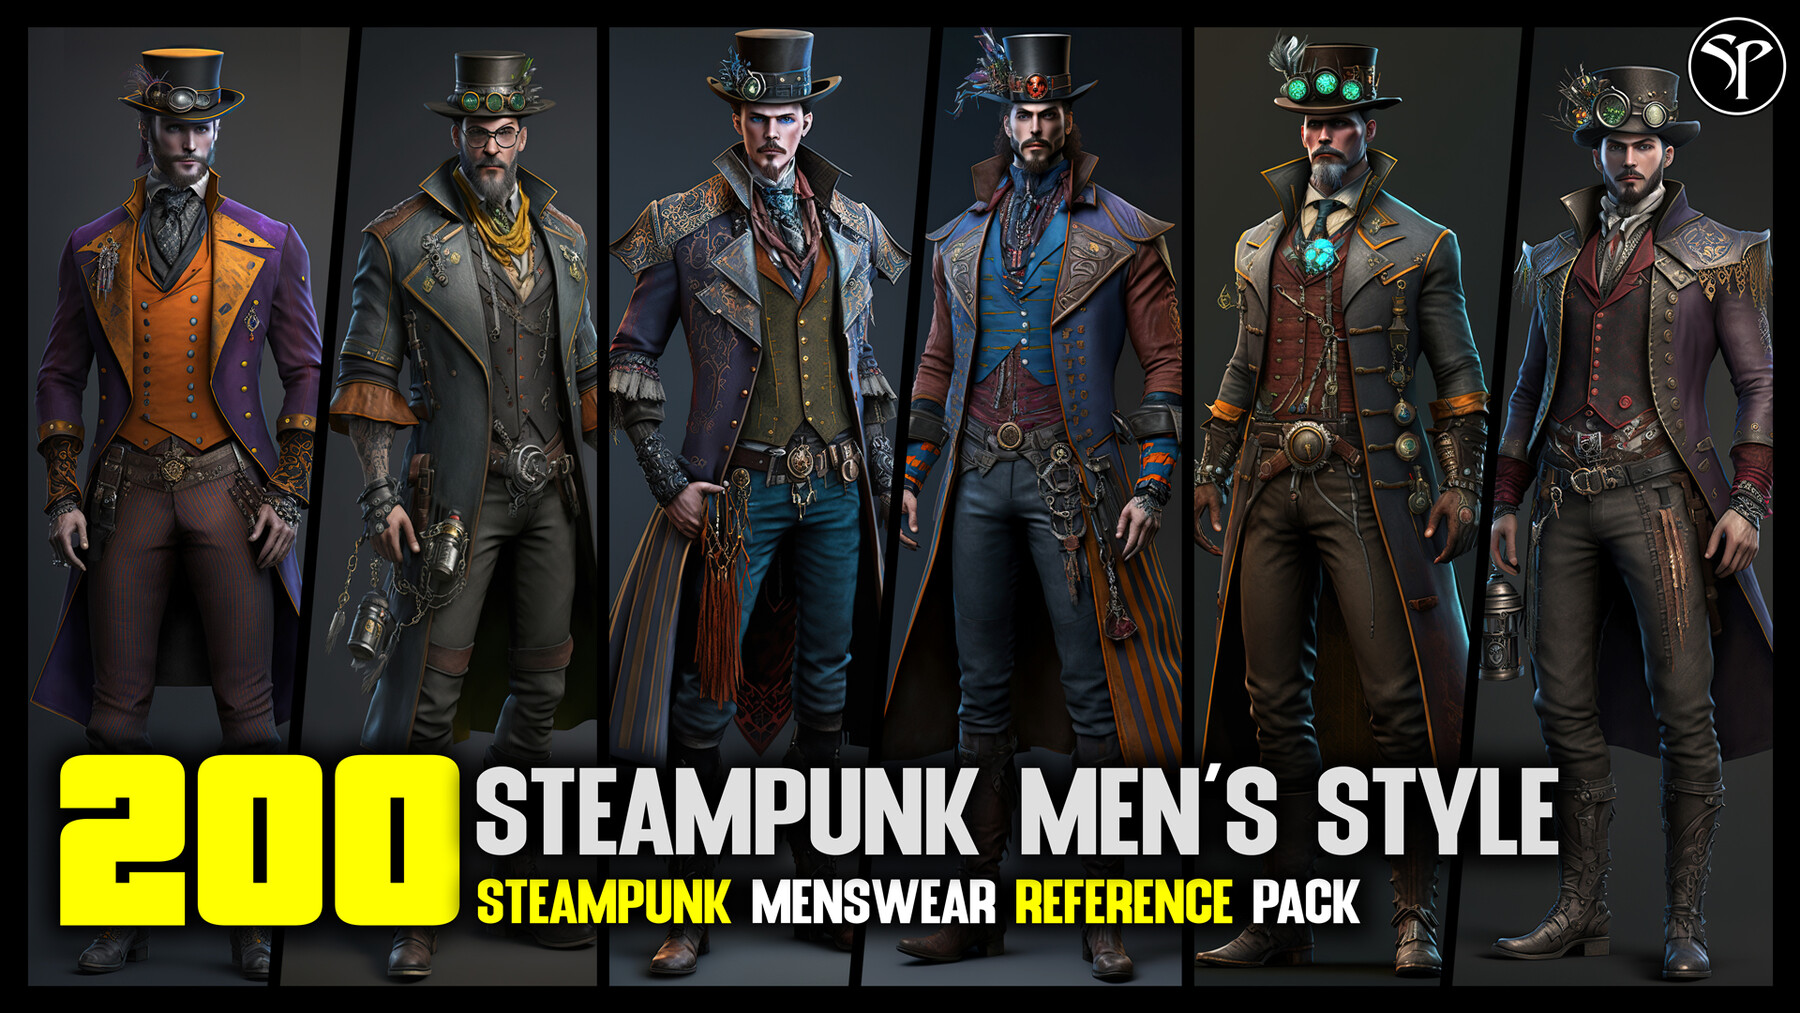 ArtStation - 200 Steampunk Men's Style - 8K Reference Image Pack - Vol 16